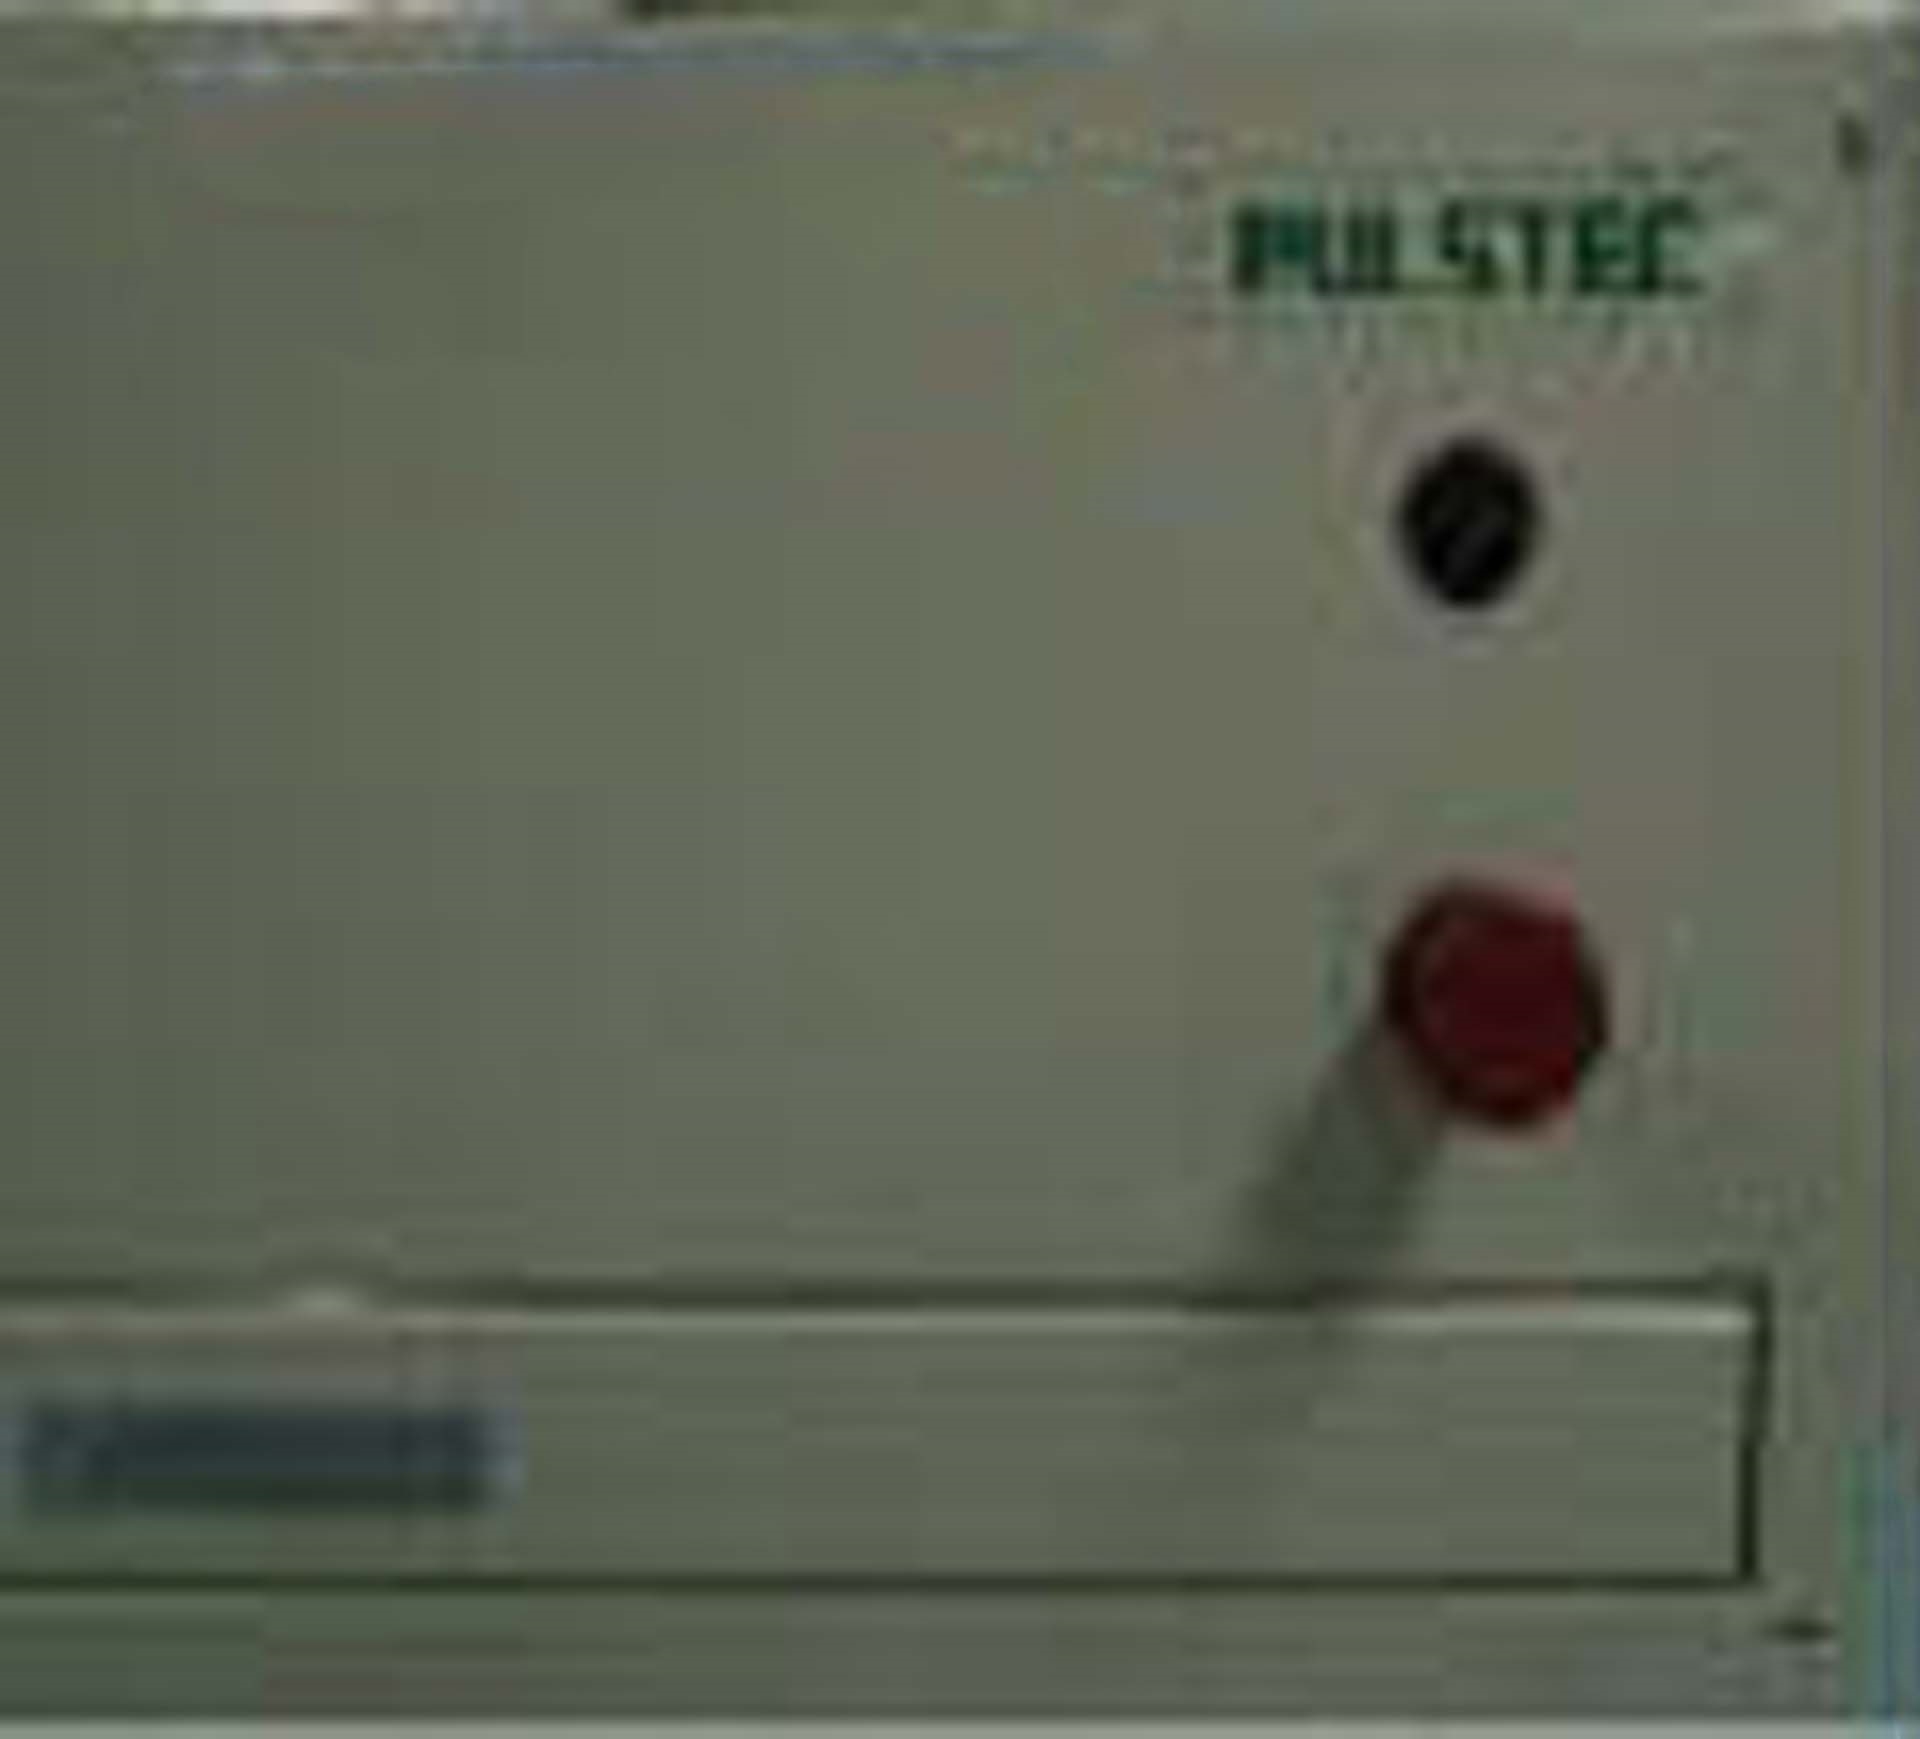 图为 已使用的 PULSTEC DHA-4000 待售